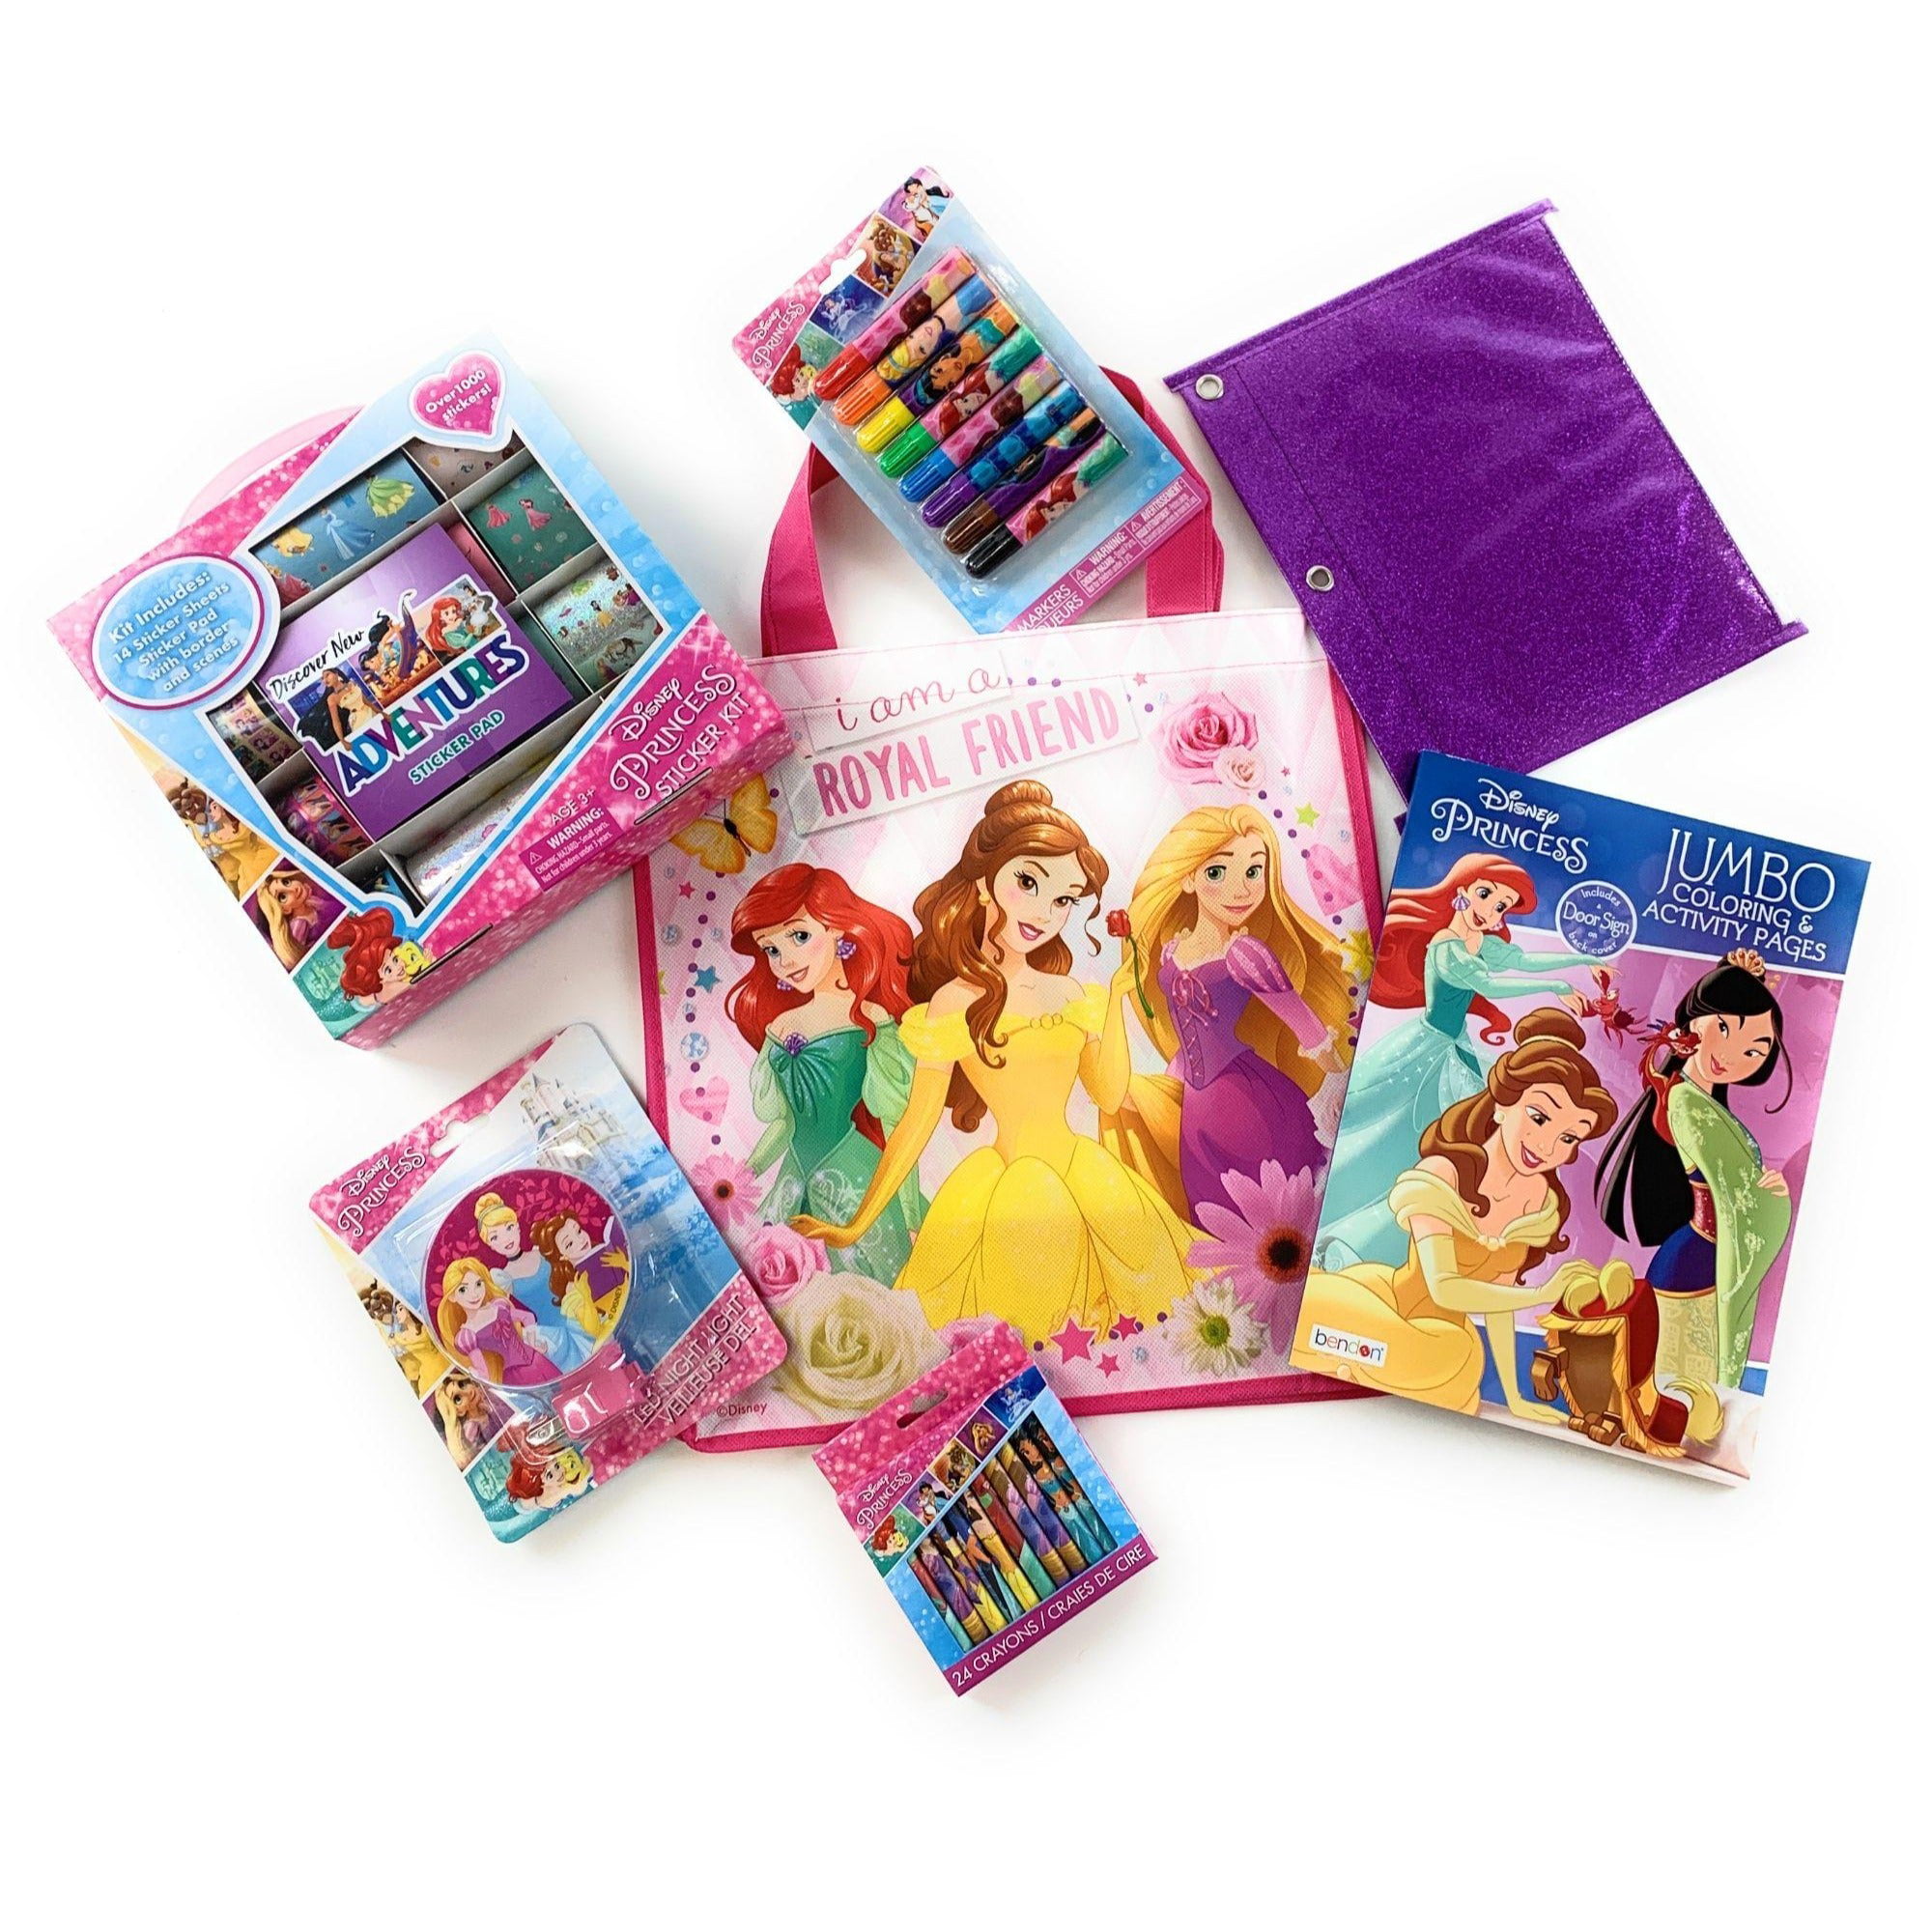 Disney Princess Art Set Bundle for Girls ~ Princess Art Kit with Coloring Utensils, Brushes, Art Pad, Stickers, More (Disney Arts and Crafts Kit)